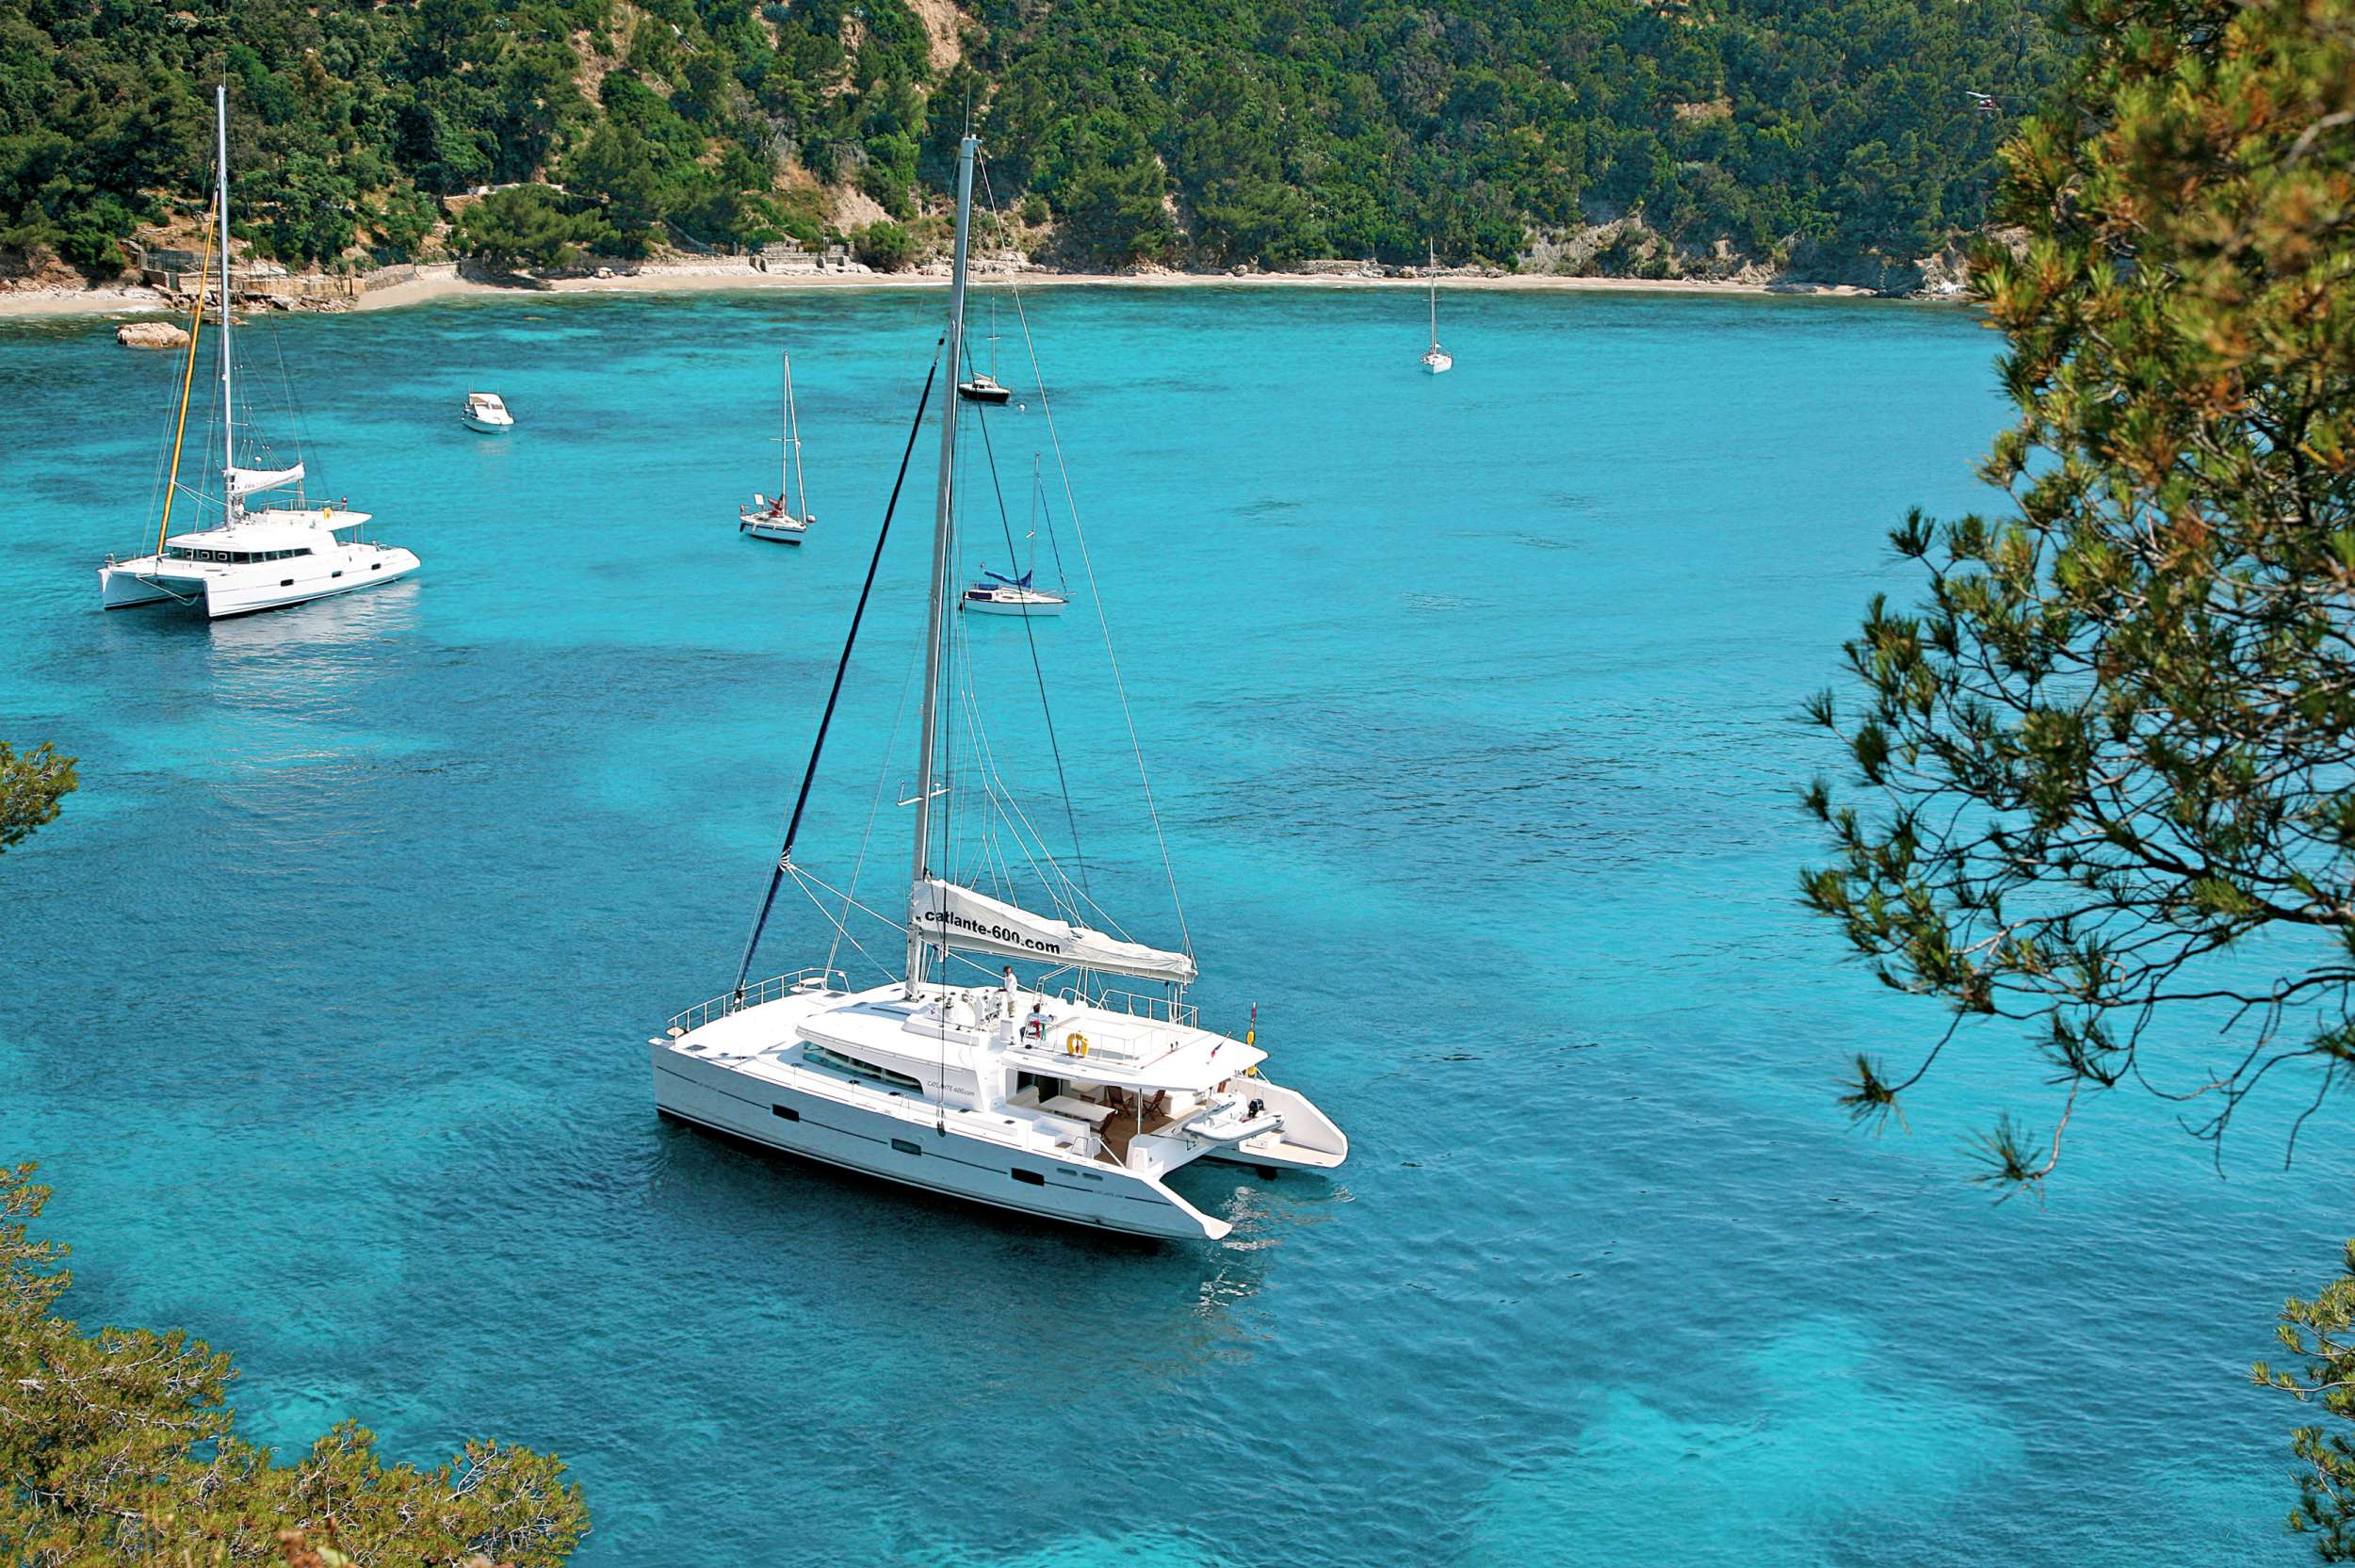 Dream 60 - Littr&eacute; &amp; Tauceti - Sailboat Charter Seychelles & Boat hire in W. Med -Naples/Sicily, W. Med - Spain/Balearics, Croatia Bahamas, Indian Ocean and SE Asia 1